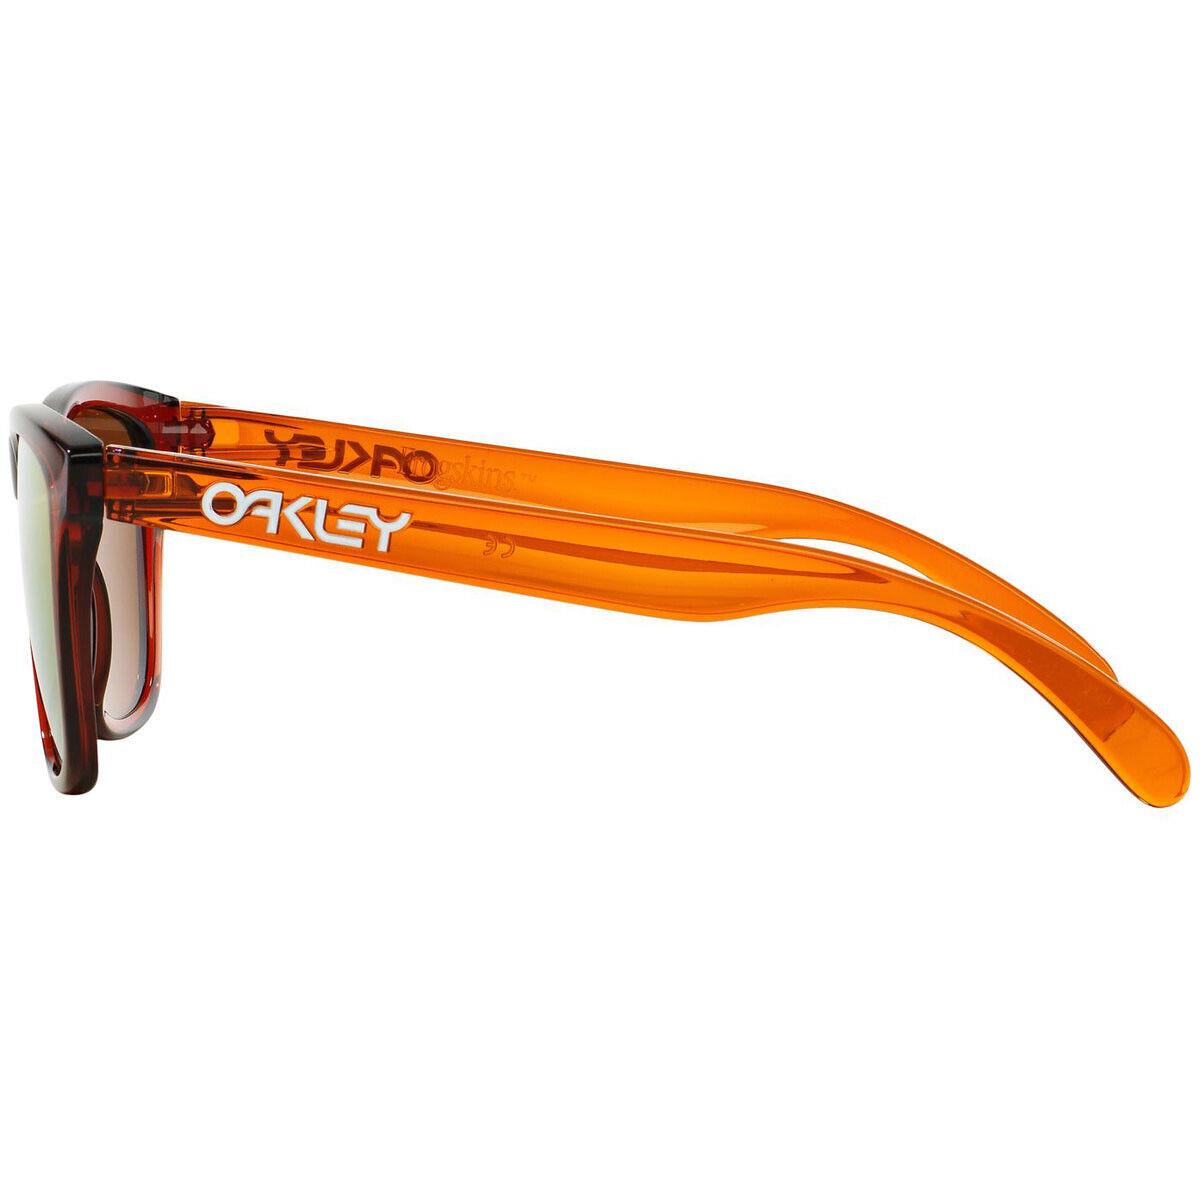 Oakley sunglasses Frogskins - Frame: , Lens: 0